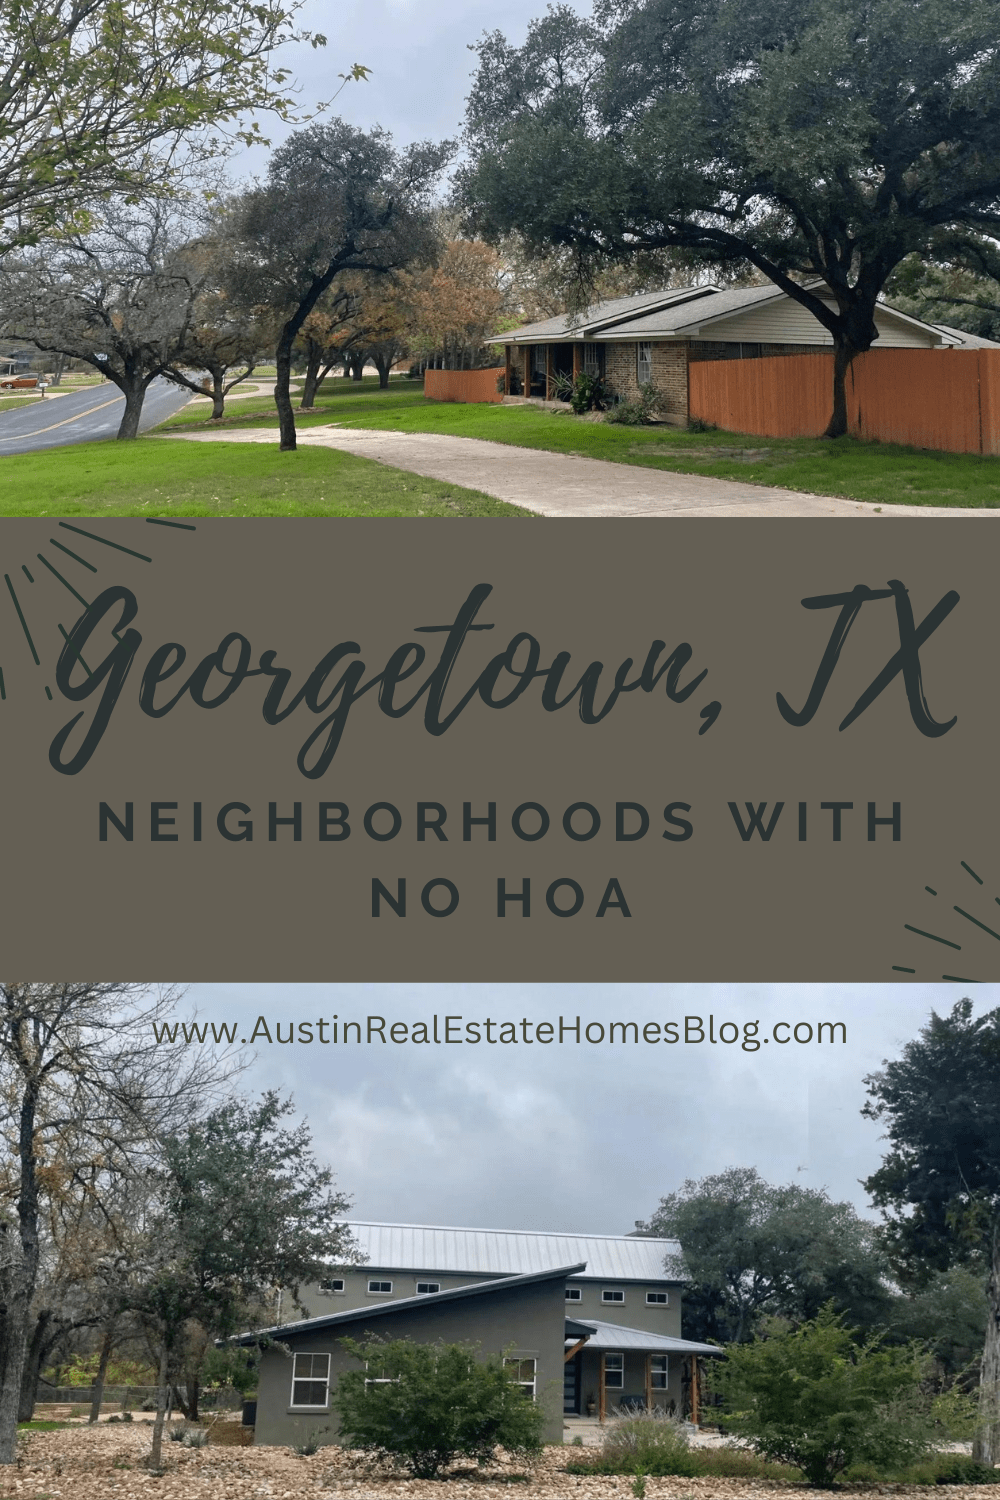 Georgetown TX neighborhoods with no HOA